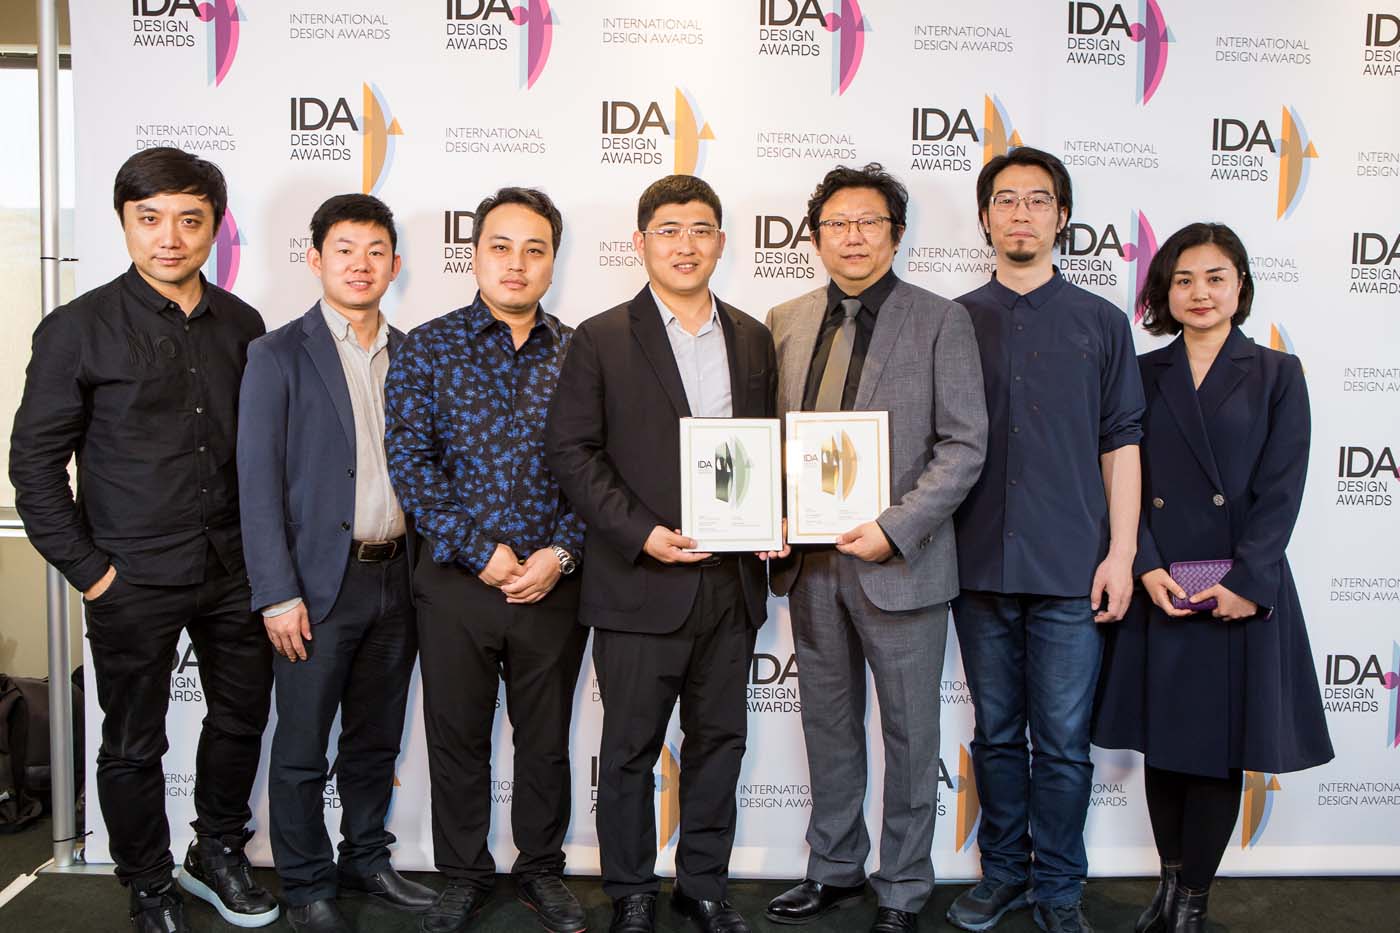 International Design Awards (IDA) an acclaimed Design competition